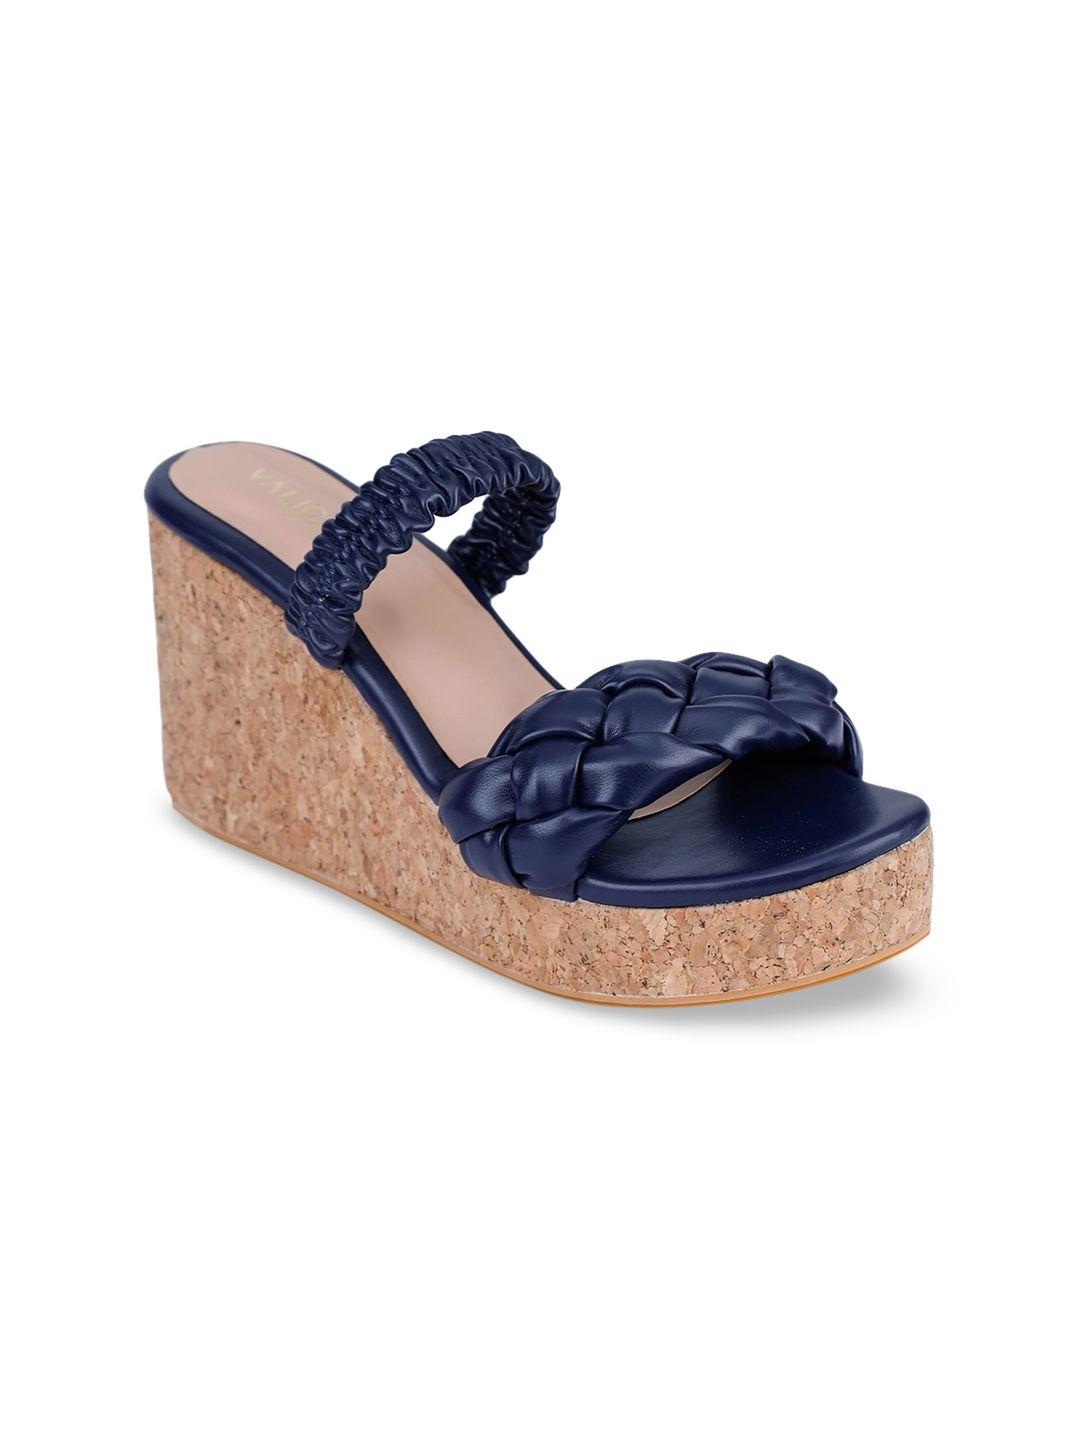 valiosaa women navy blue textured sandals